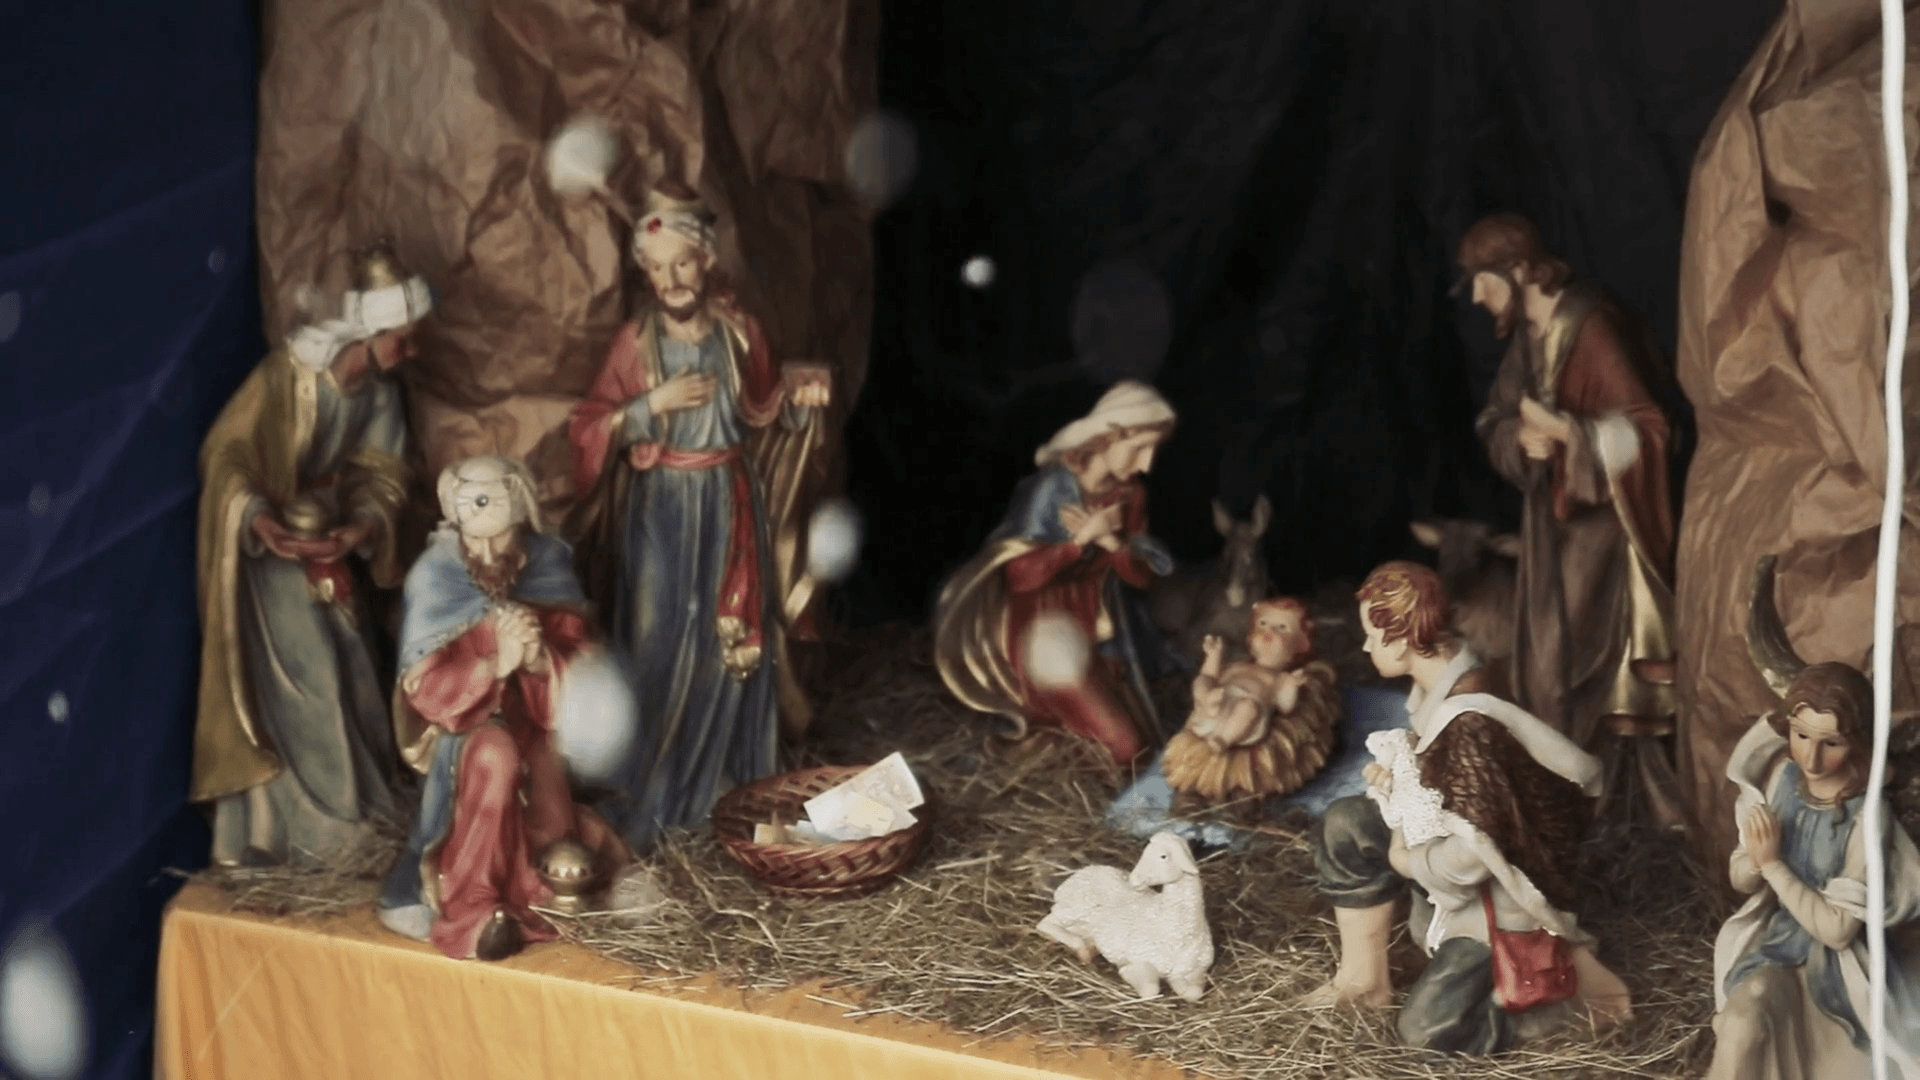 Christmas nativity scene with Mary, Joseph, baby Jesus, and animals